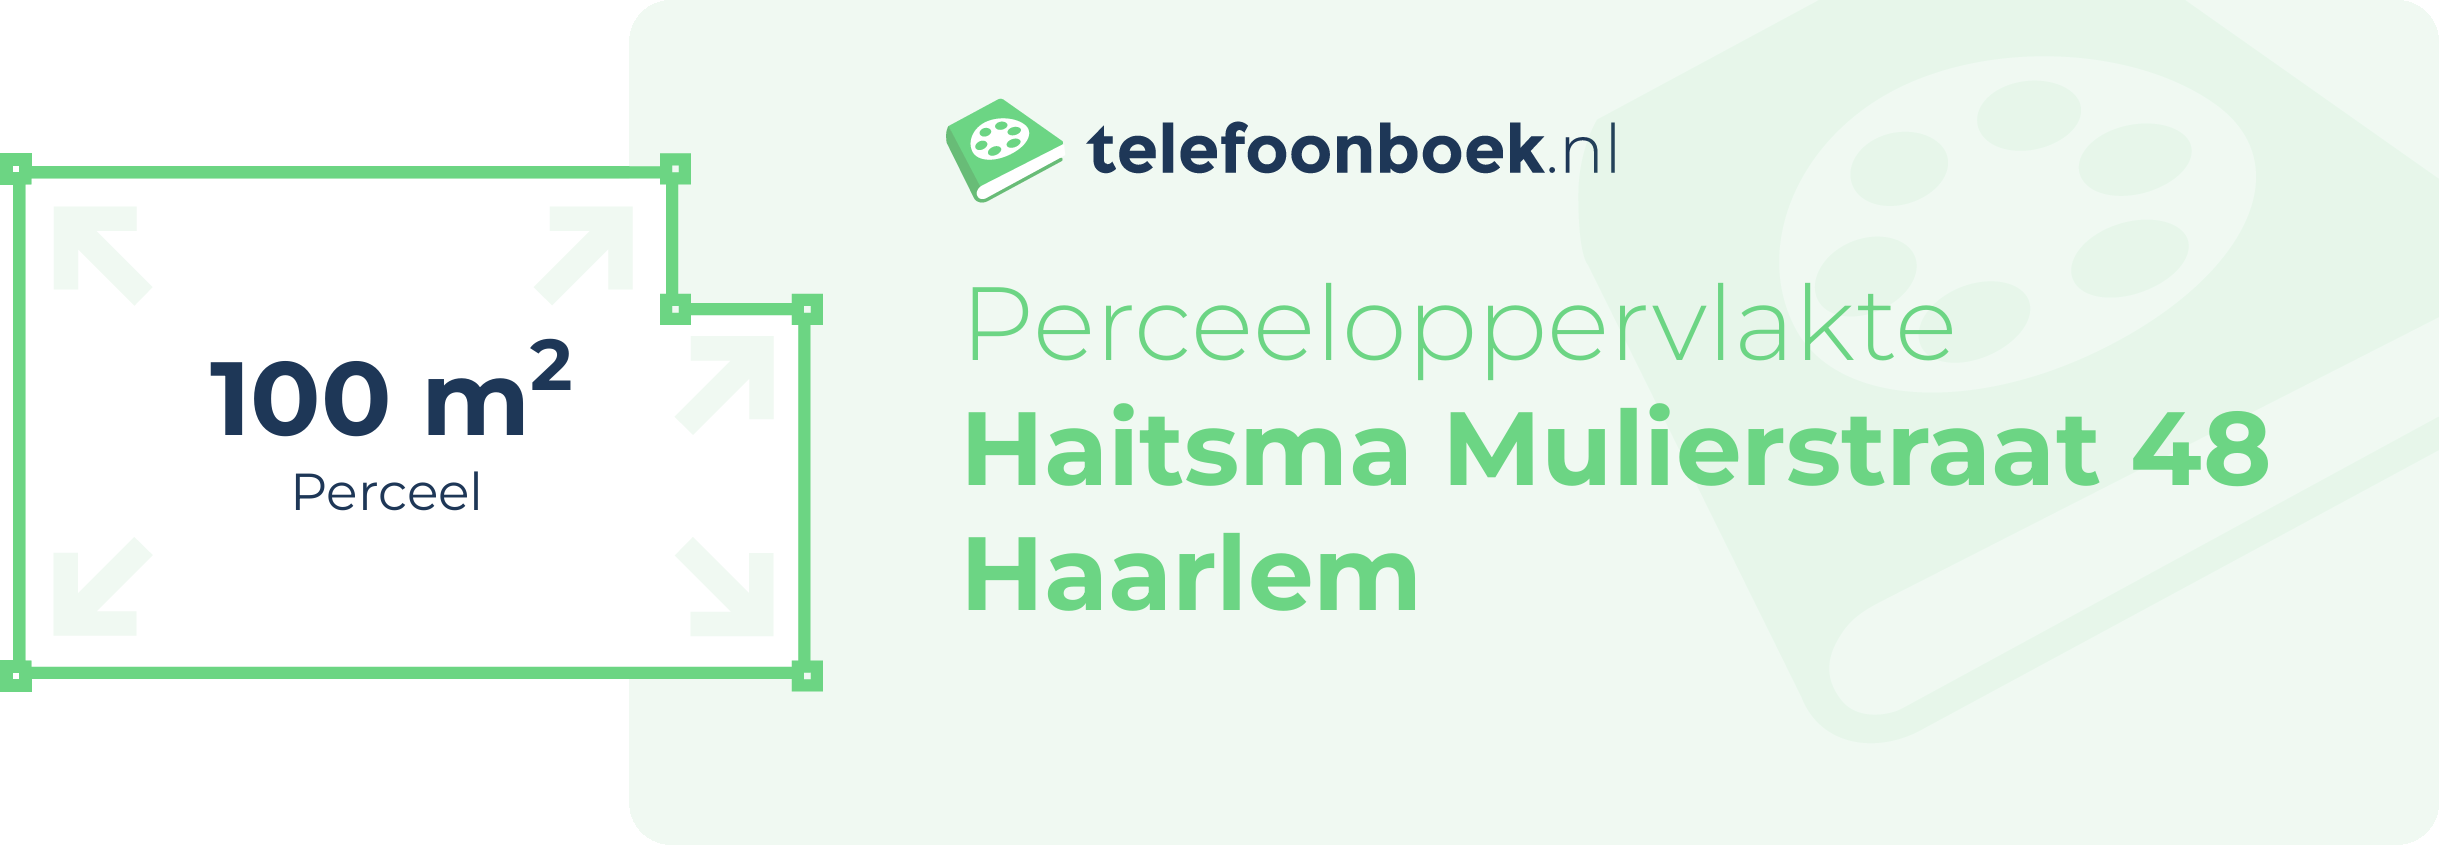 Perceeloppervlakte Haitsma Mulierstraat 48 Haarlem